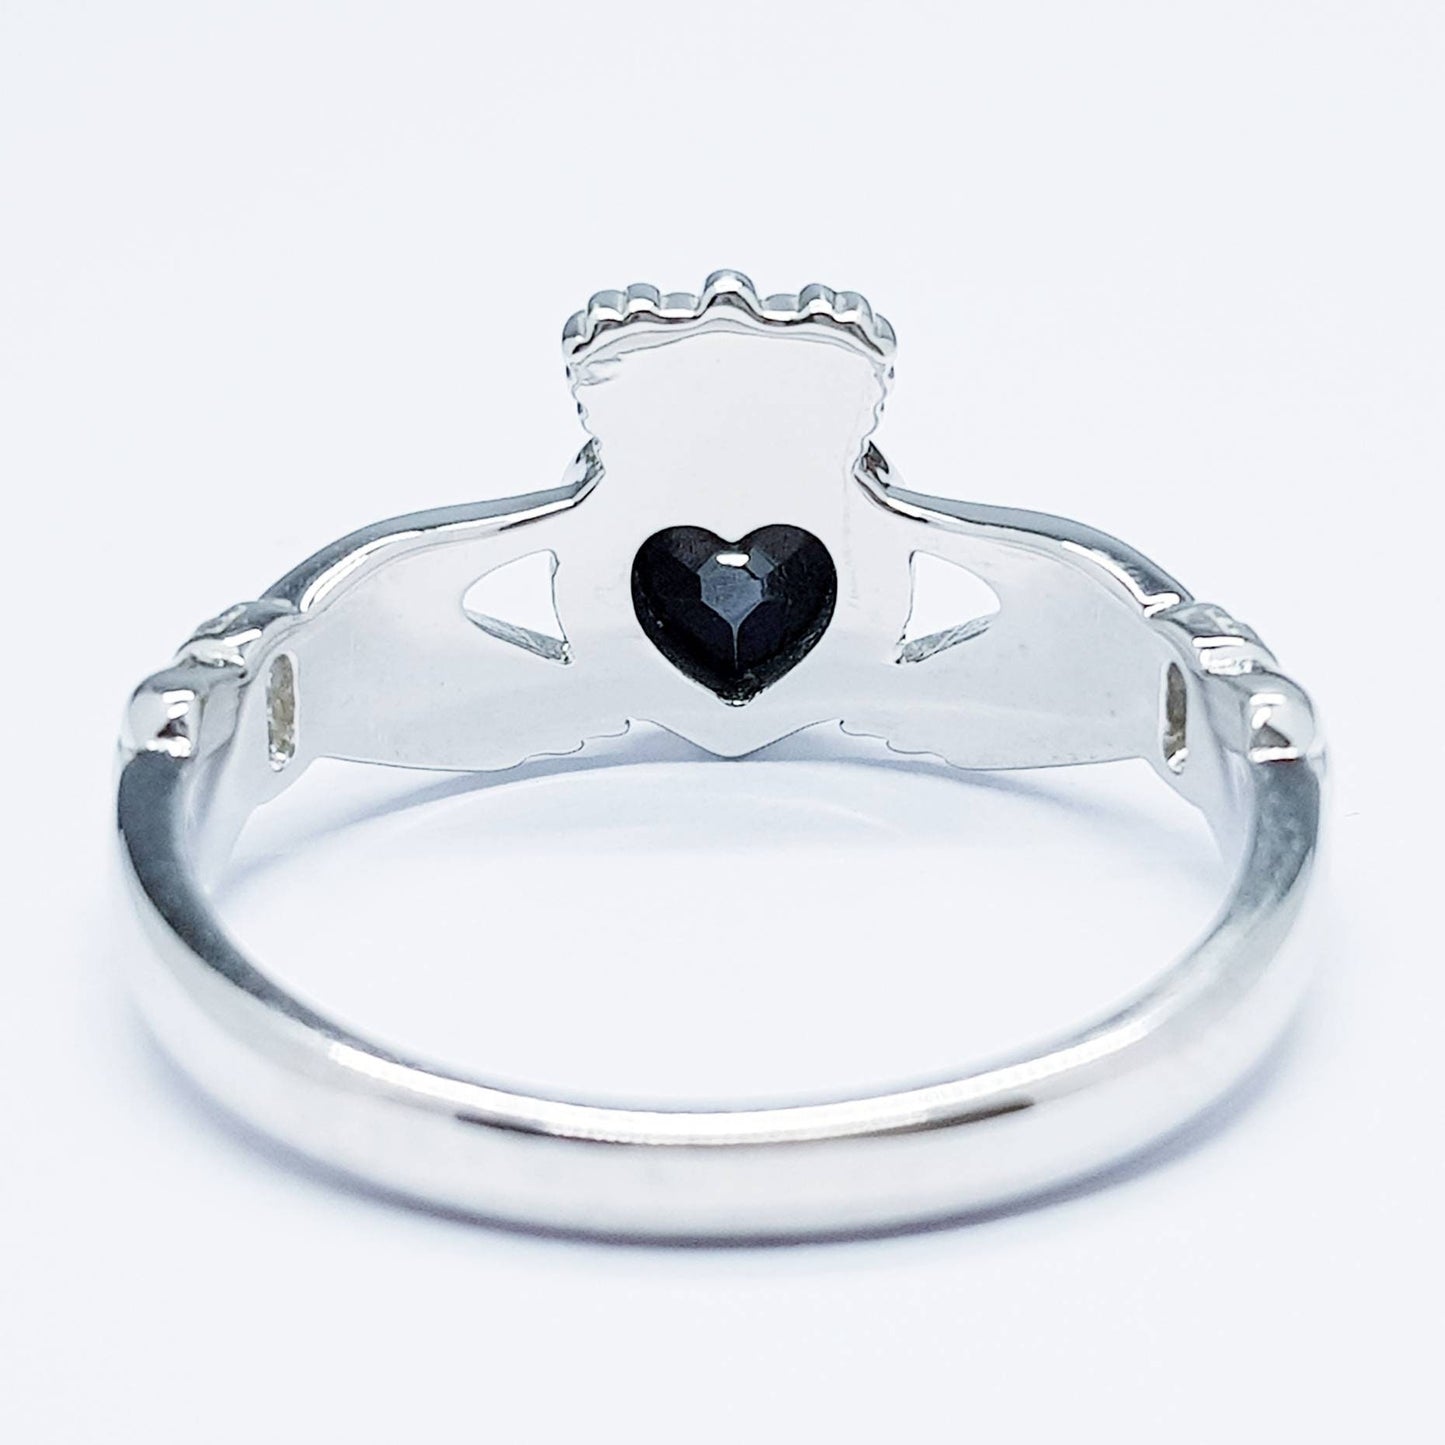 Irish Claddagh ring set with black stone, silver claddagh rings